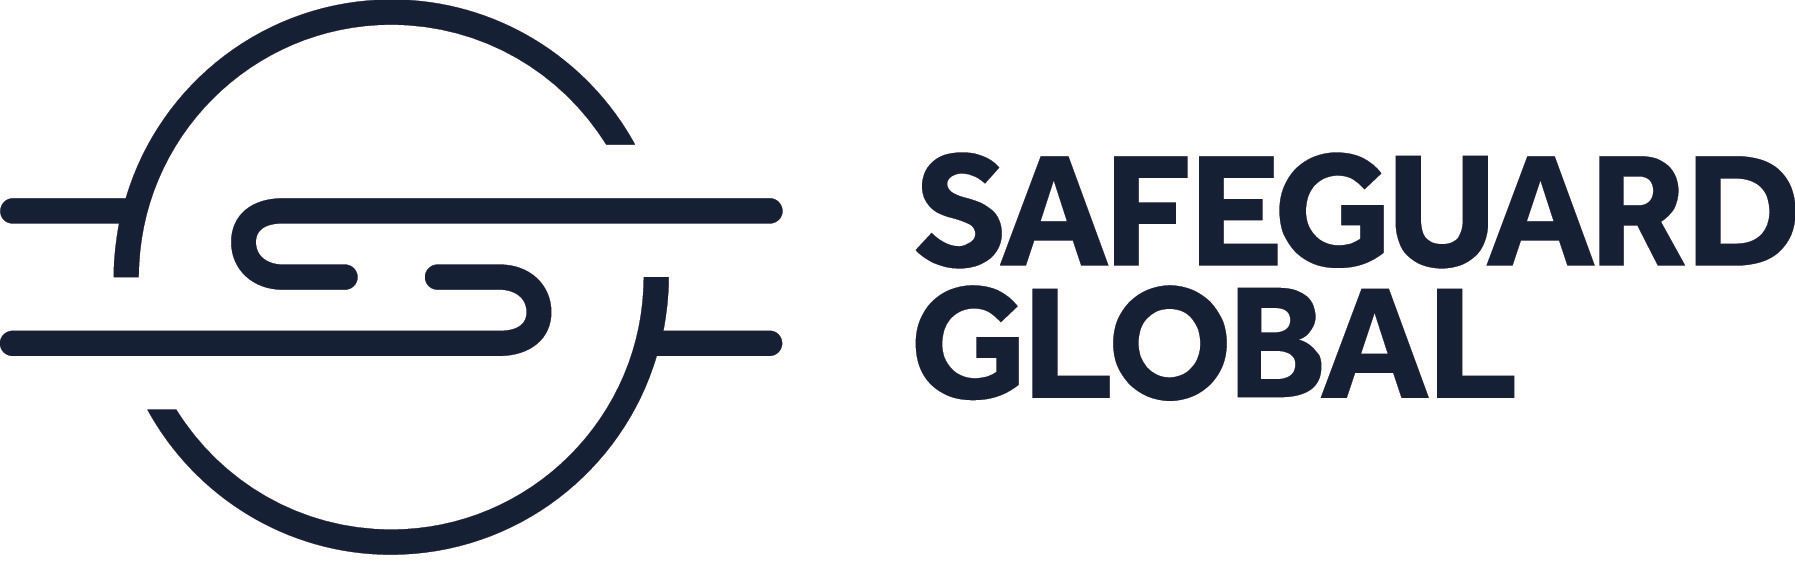 All safeguard global